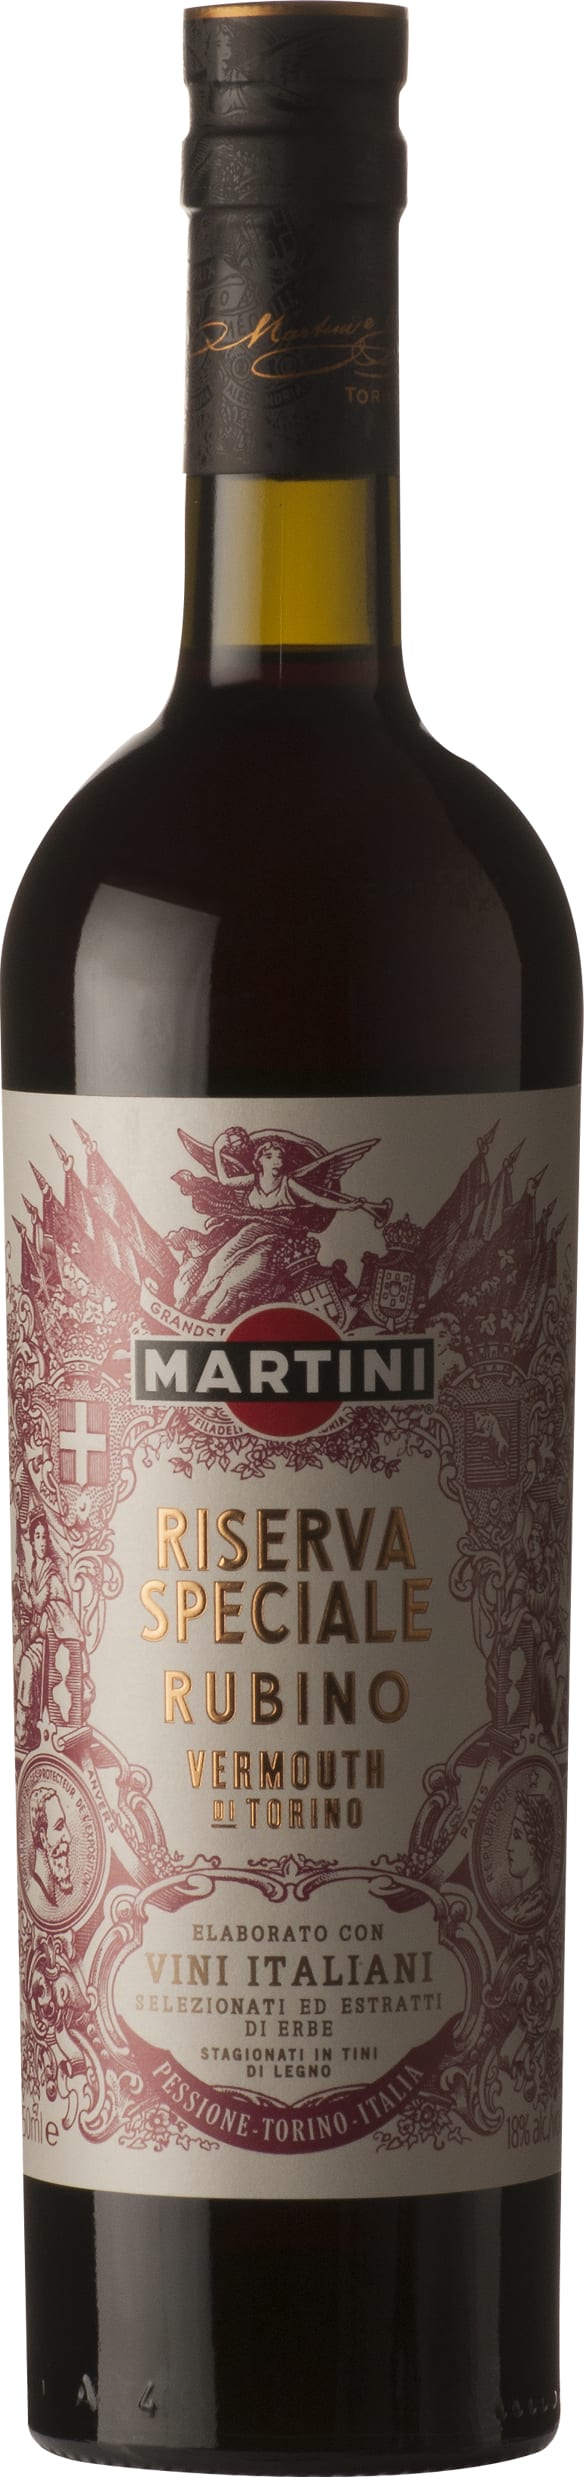 Martini Riserva Speciale Rubino 75cl NV - Buy Martini Wines from GREAT WINES DIRECT wine shop